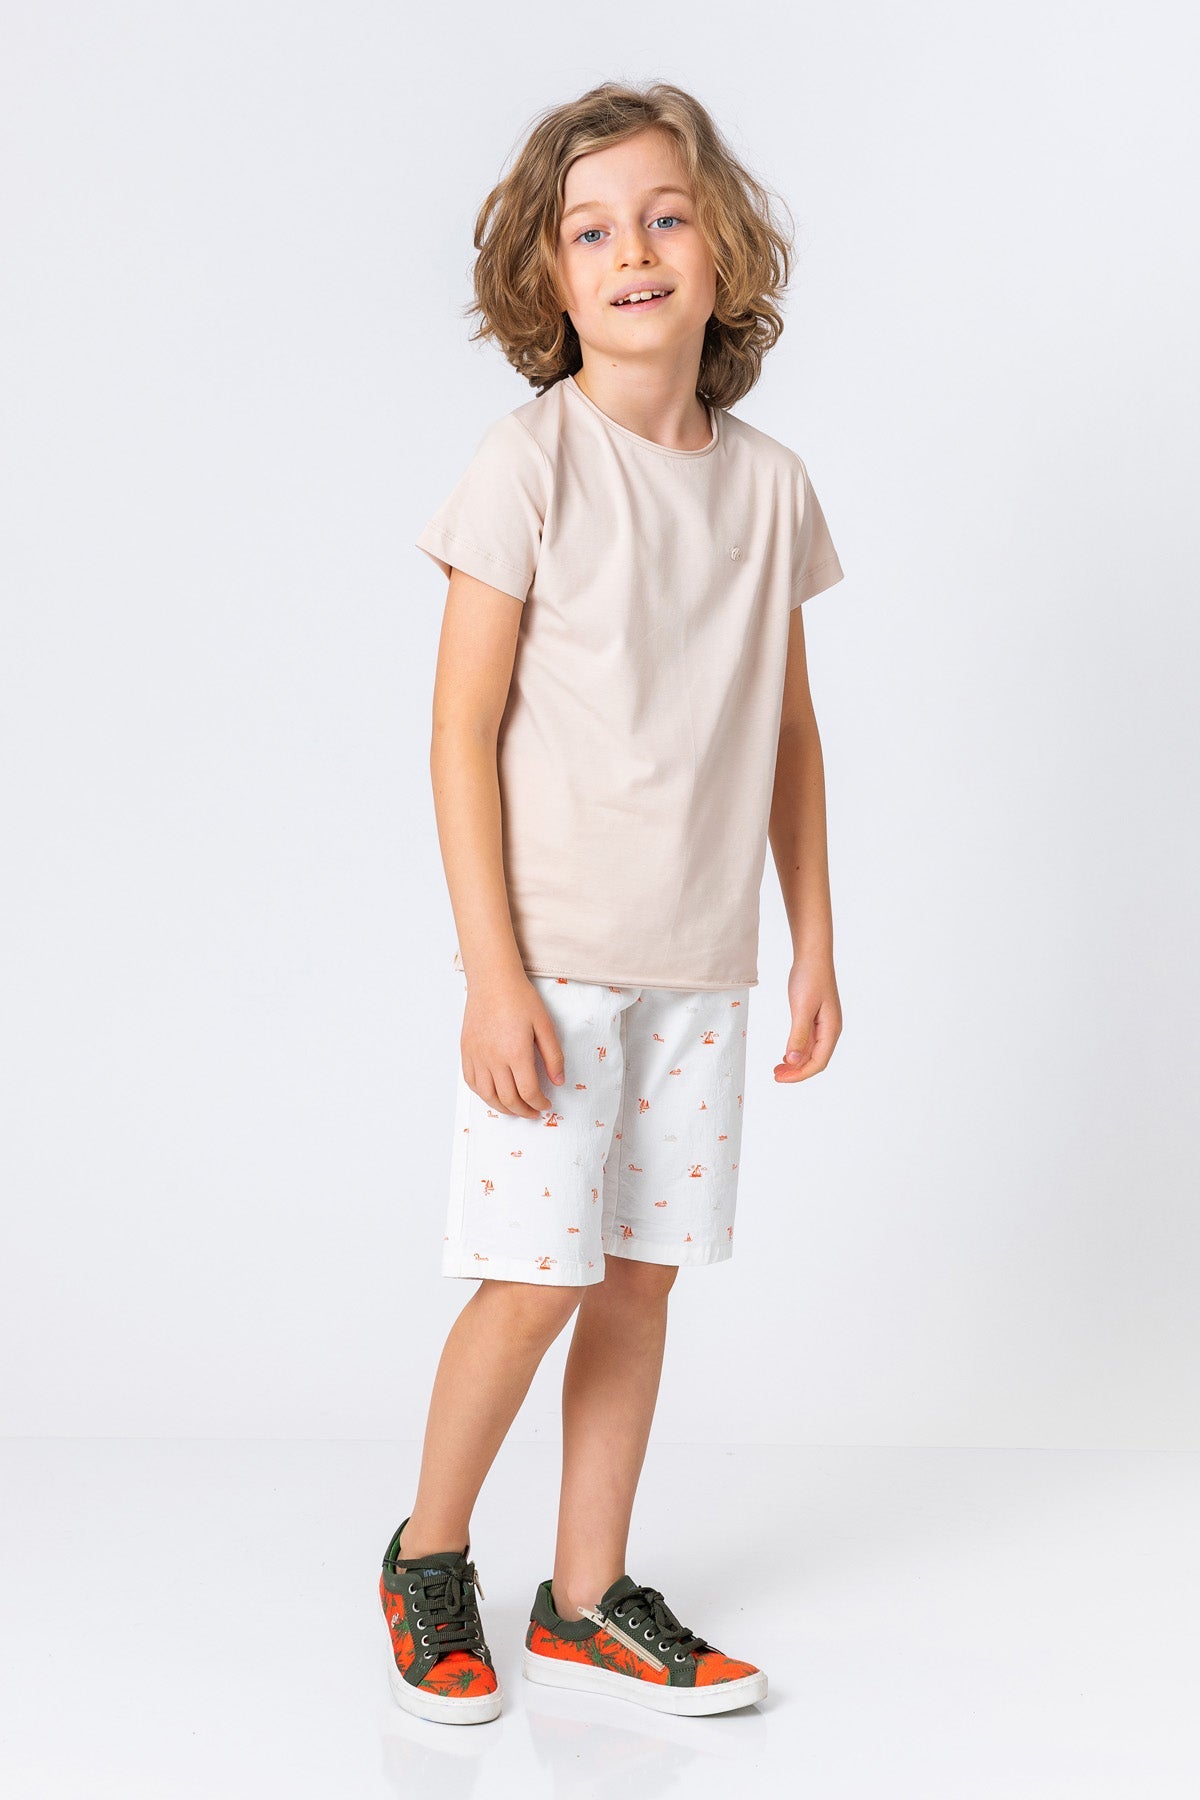 Basic Kids Sleeve Round InCity Short Solid Boys Plain T-Shirt Neck